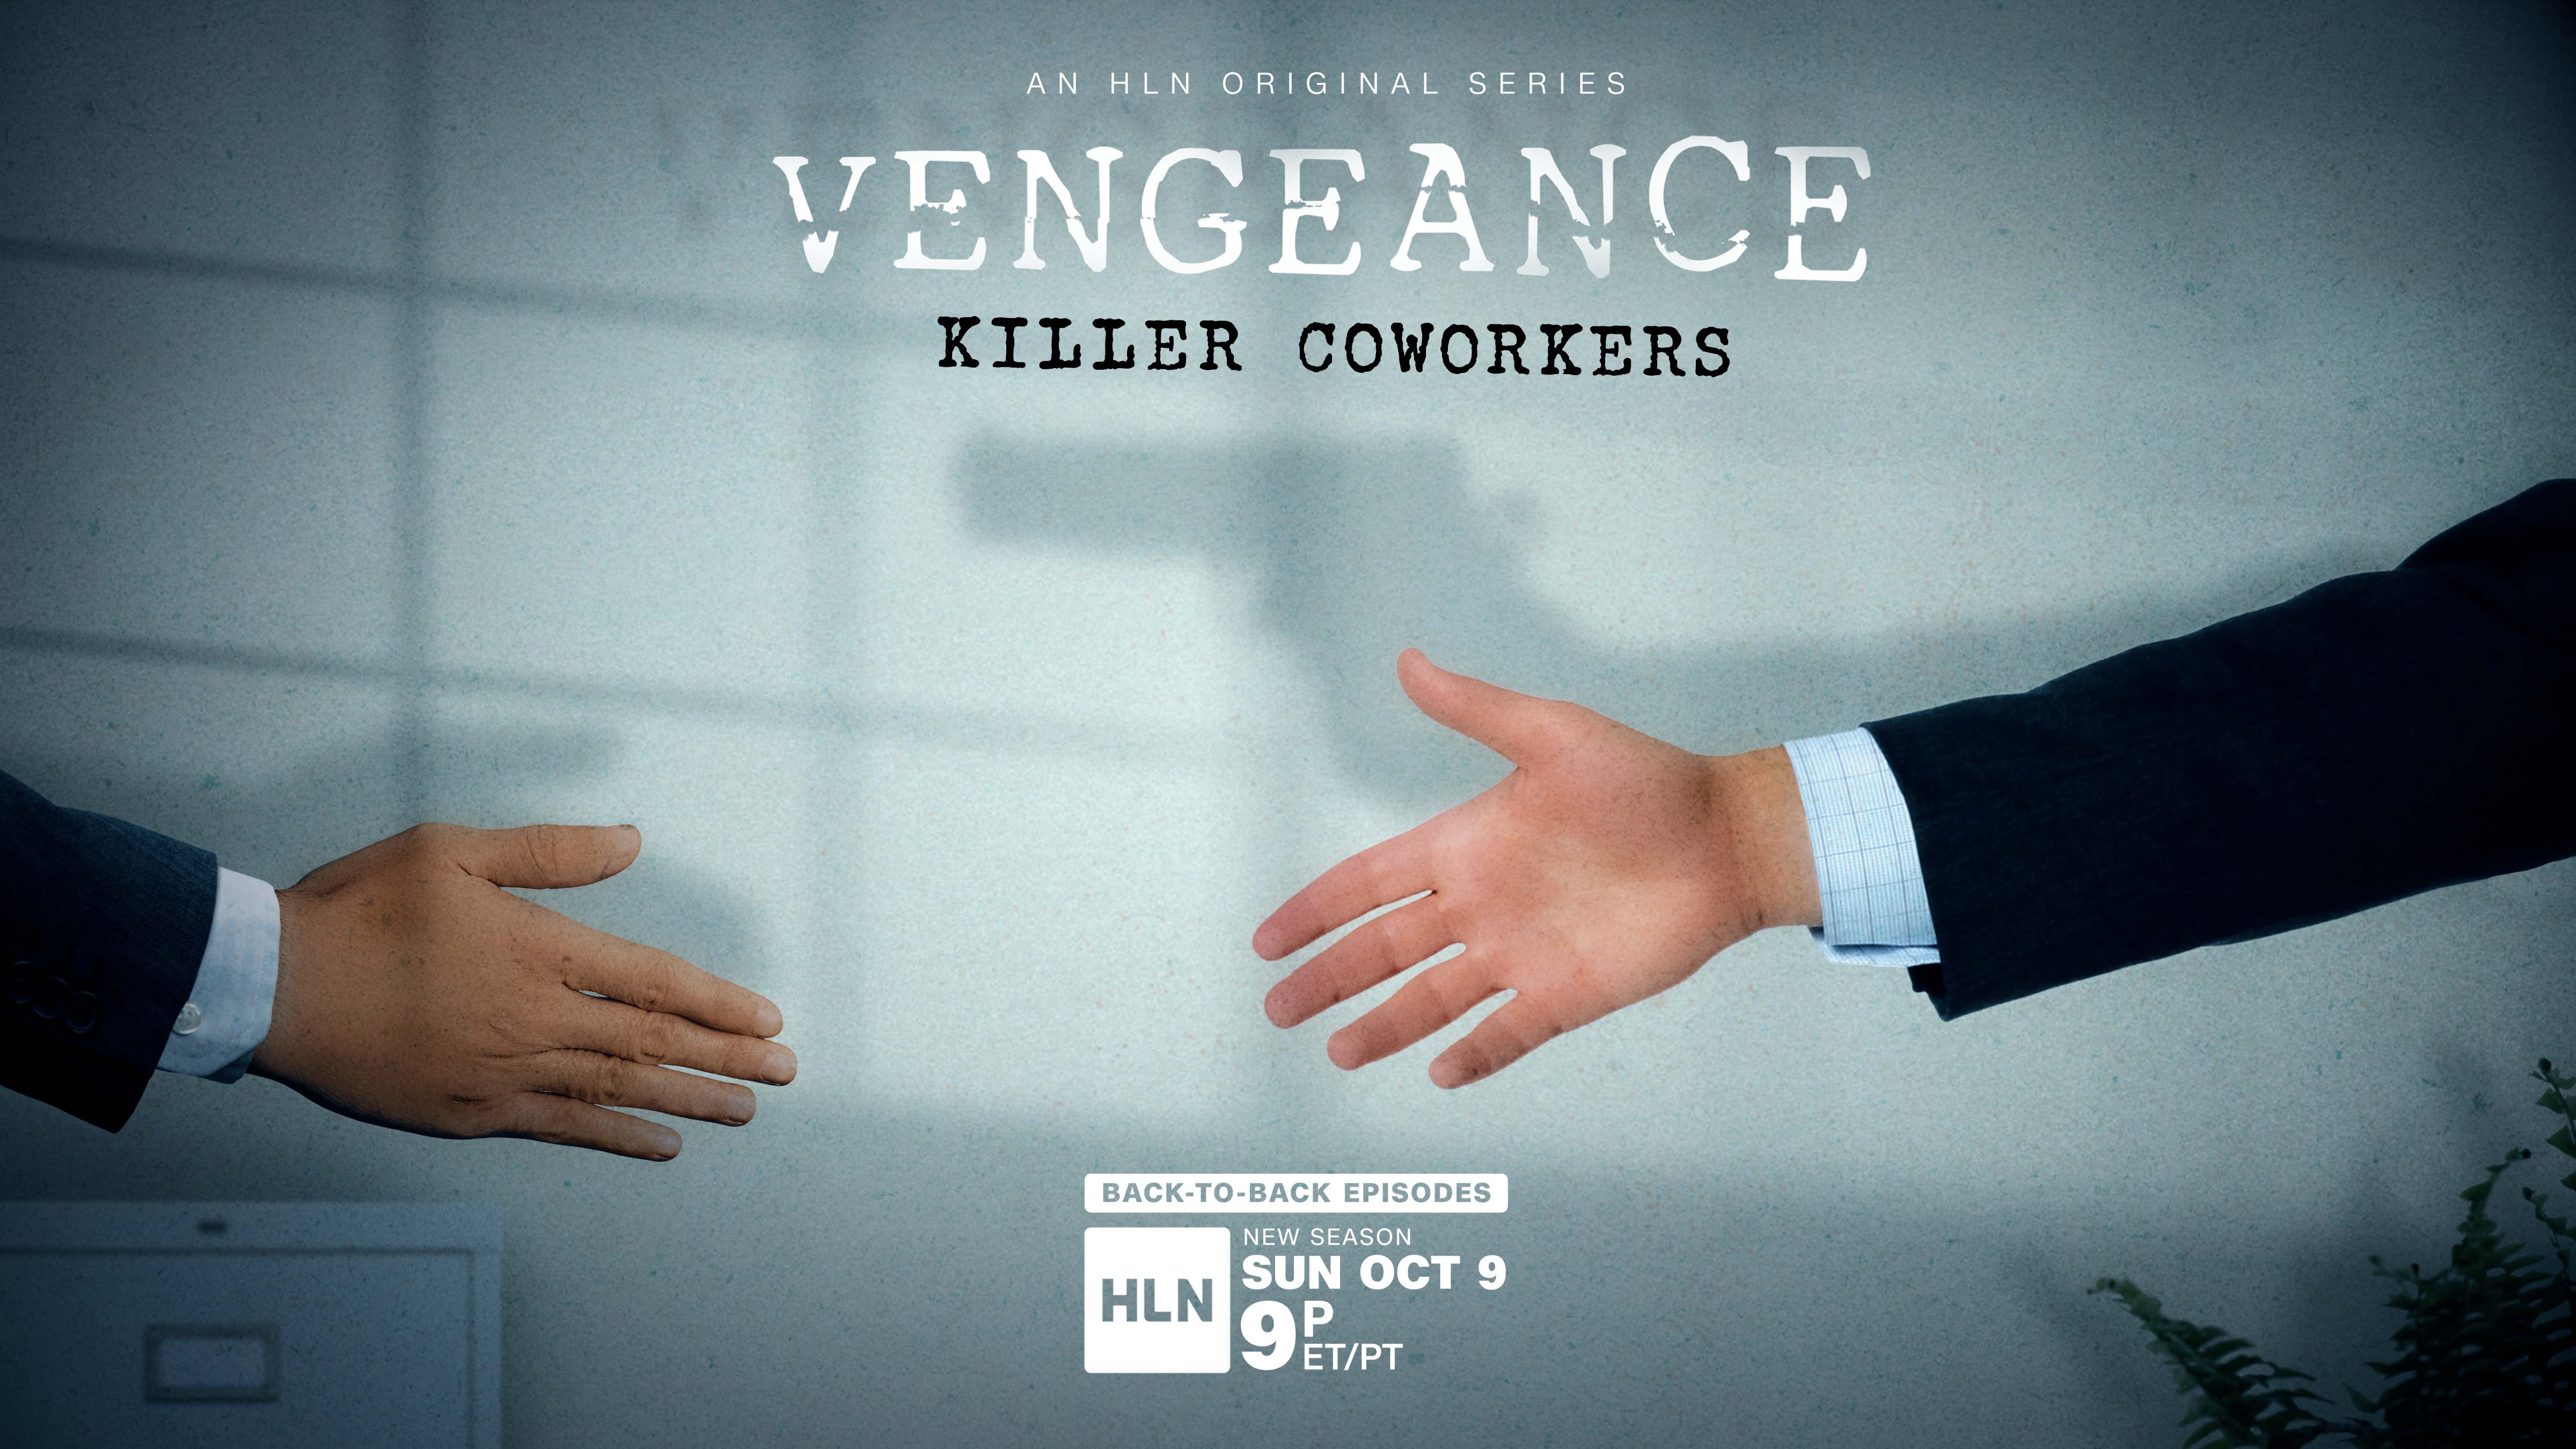 VENGEANCE: Killer Coworkers” Returns on October 9